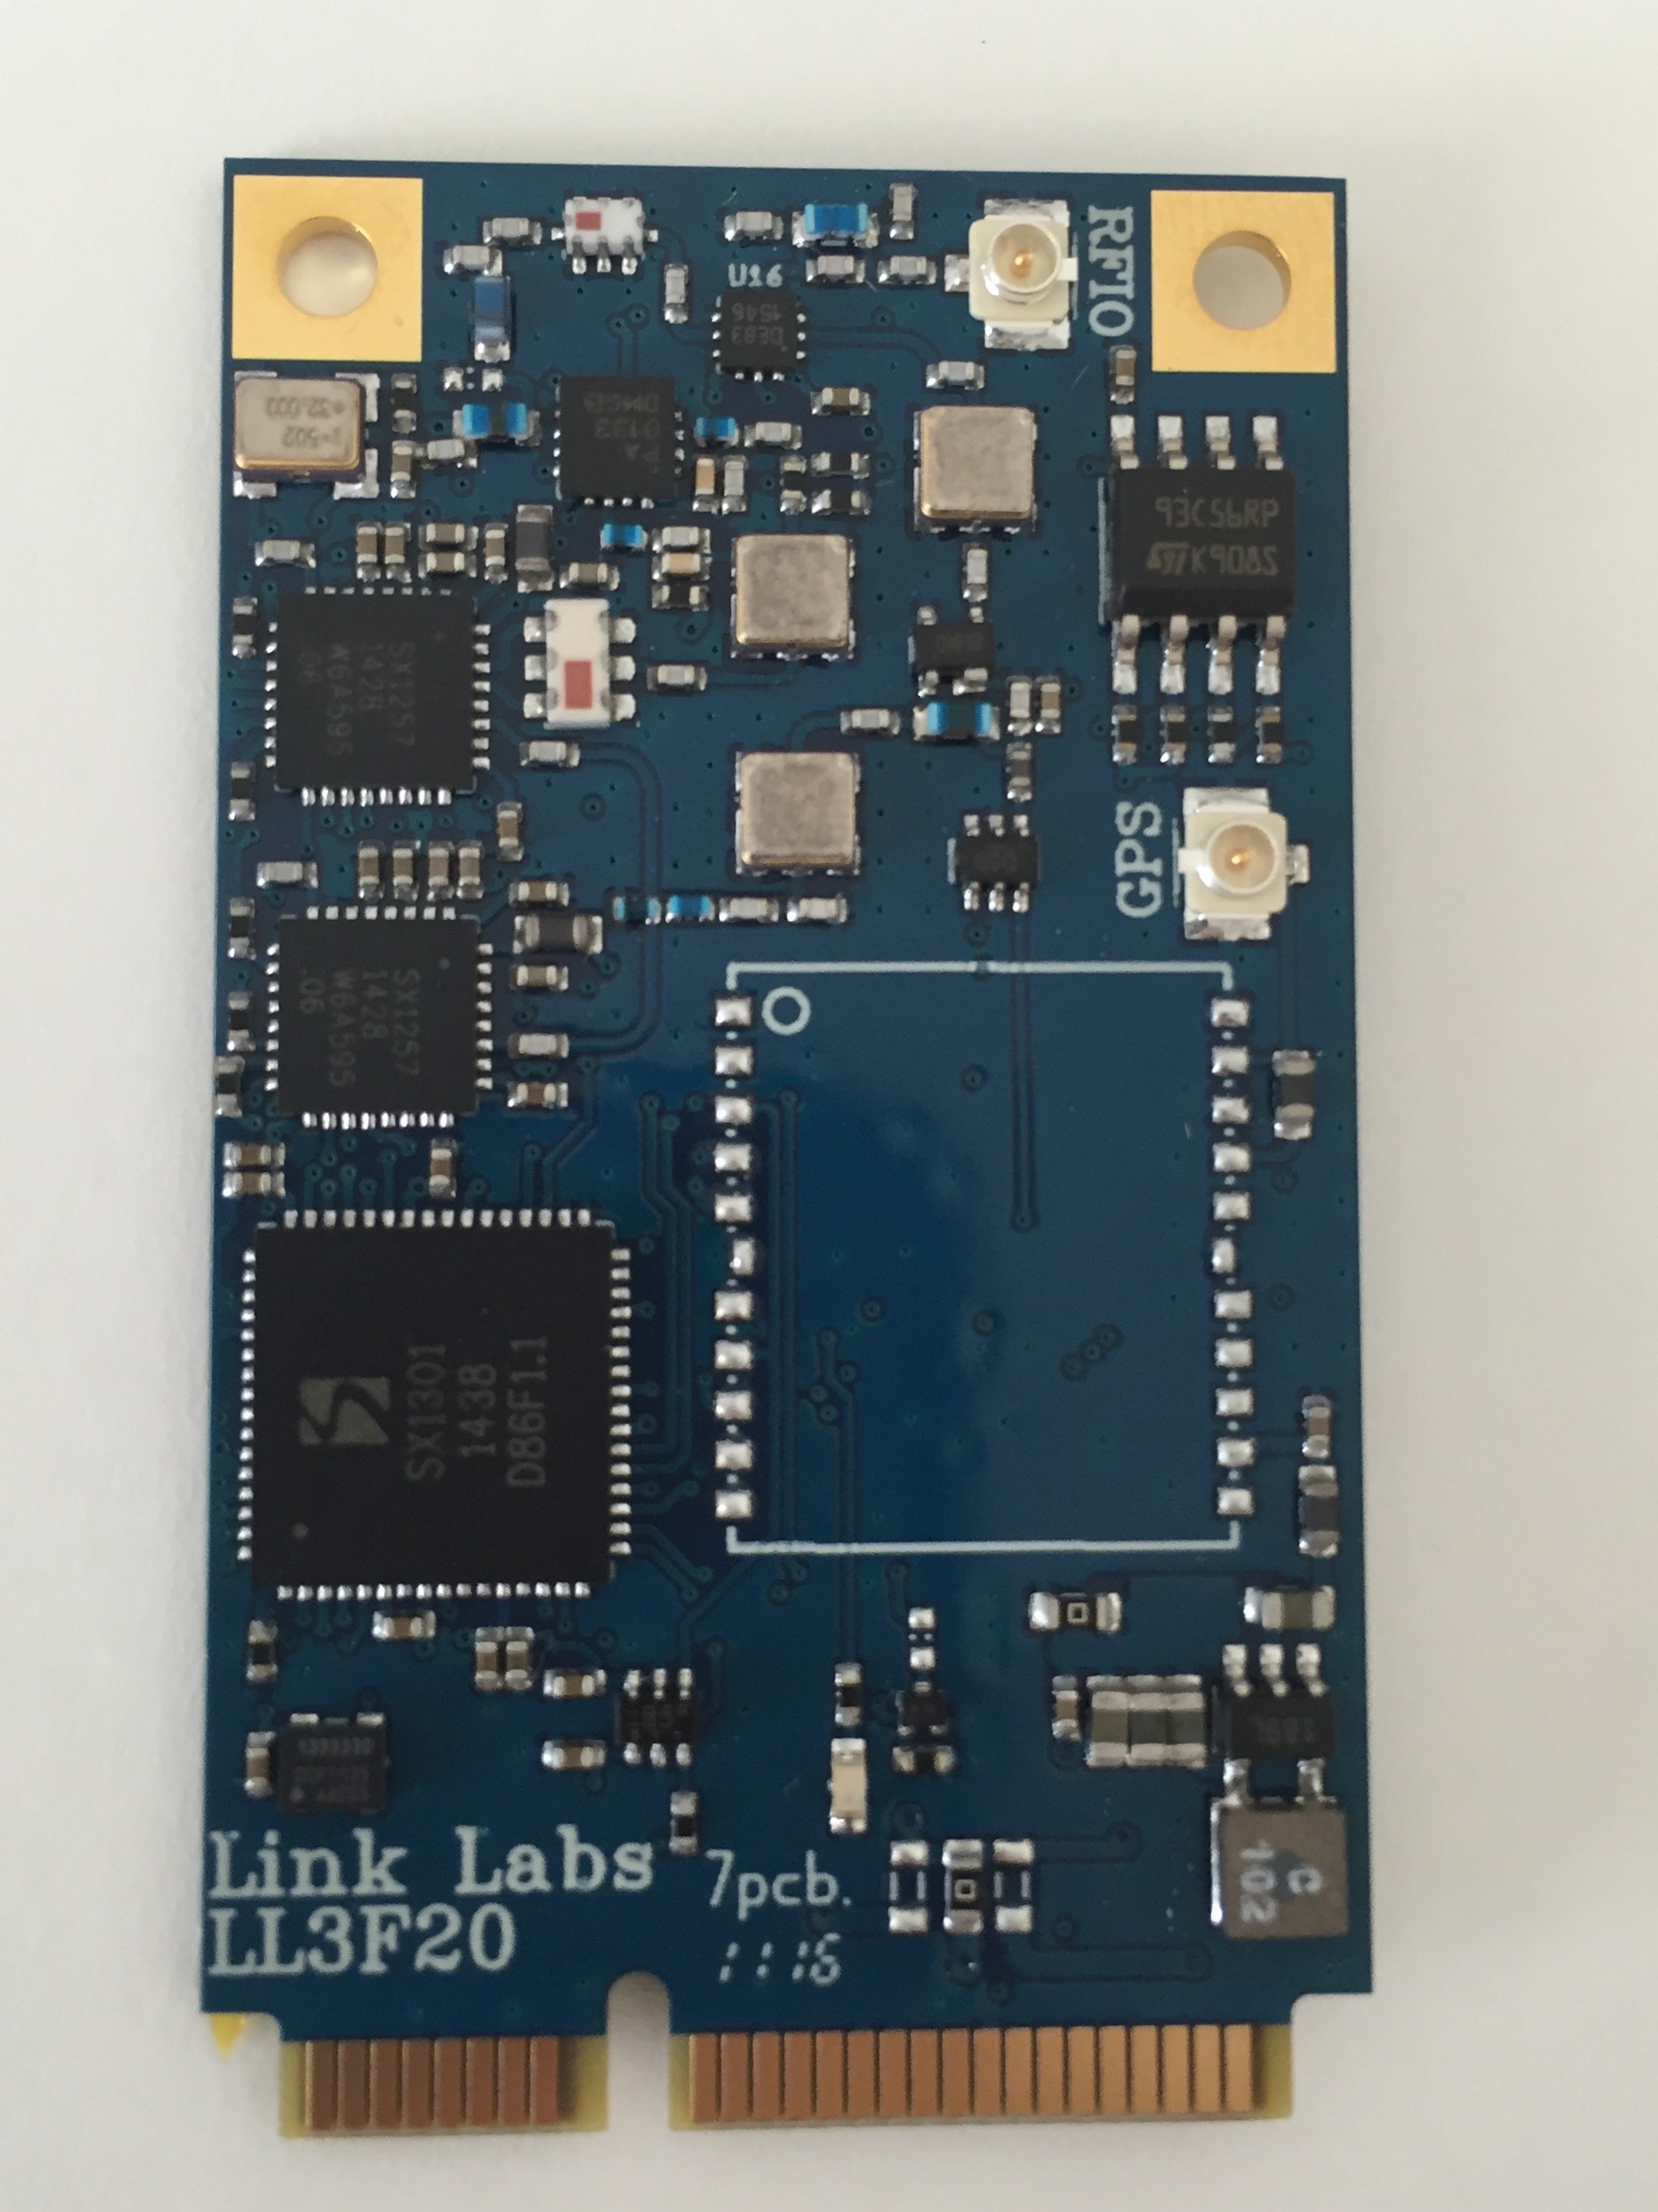 MikroTik R11e-LR2 Gateway card for LoRa technology in mini PCIe form